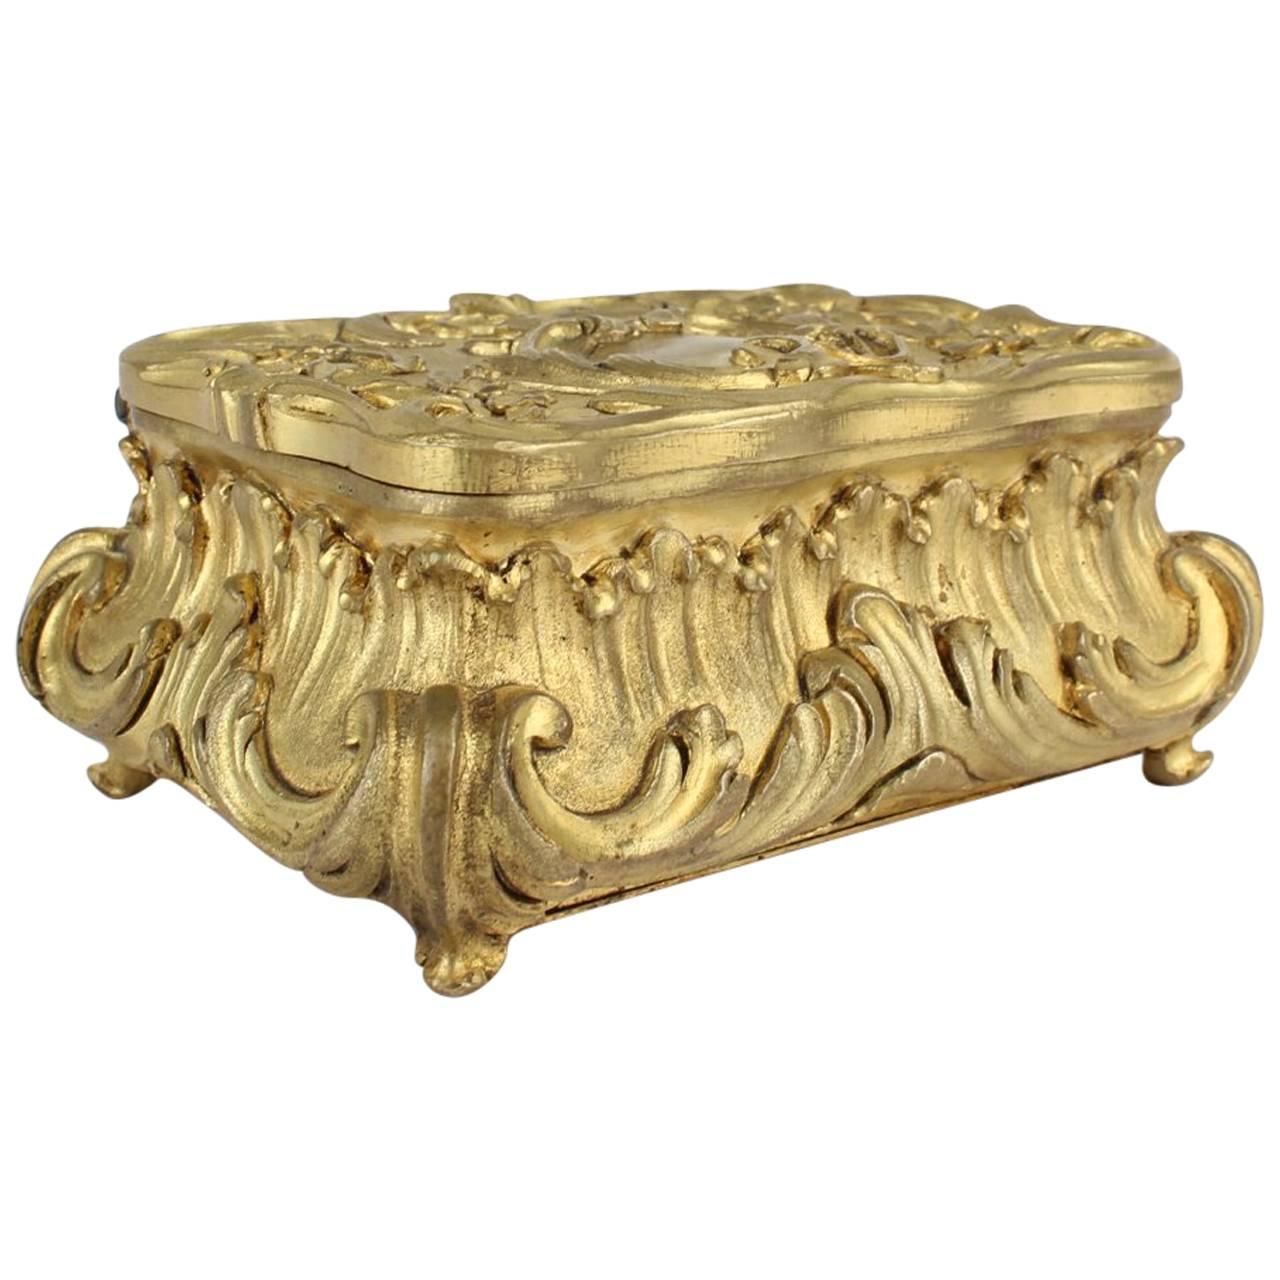 Antique Small Doré Gilt Bronze Table Box or Casket, 19th Century